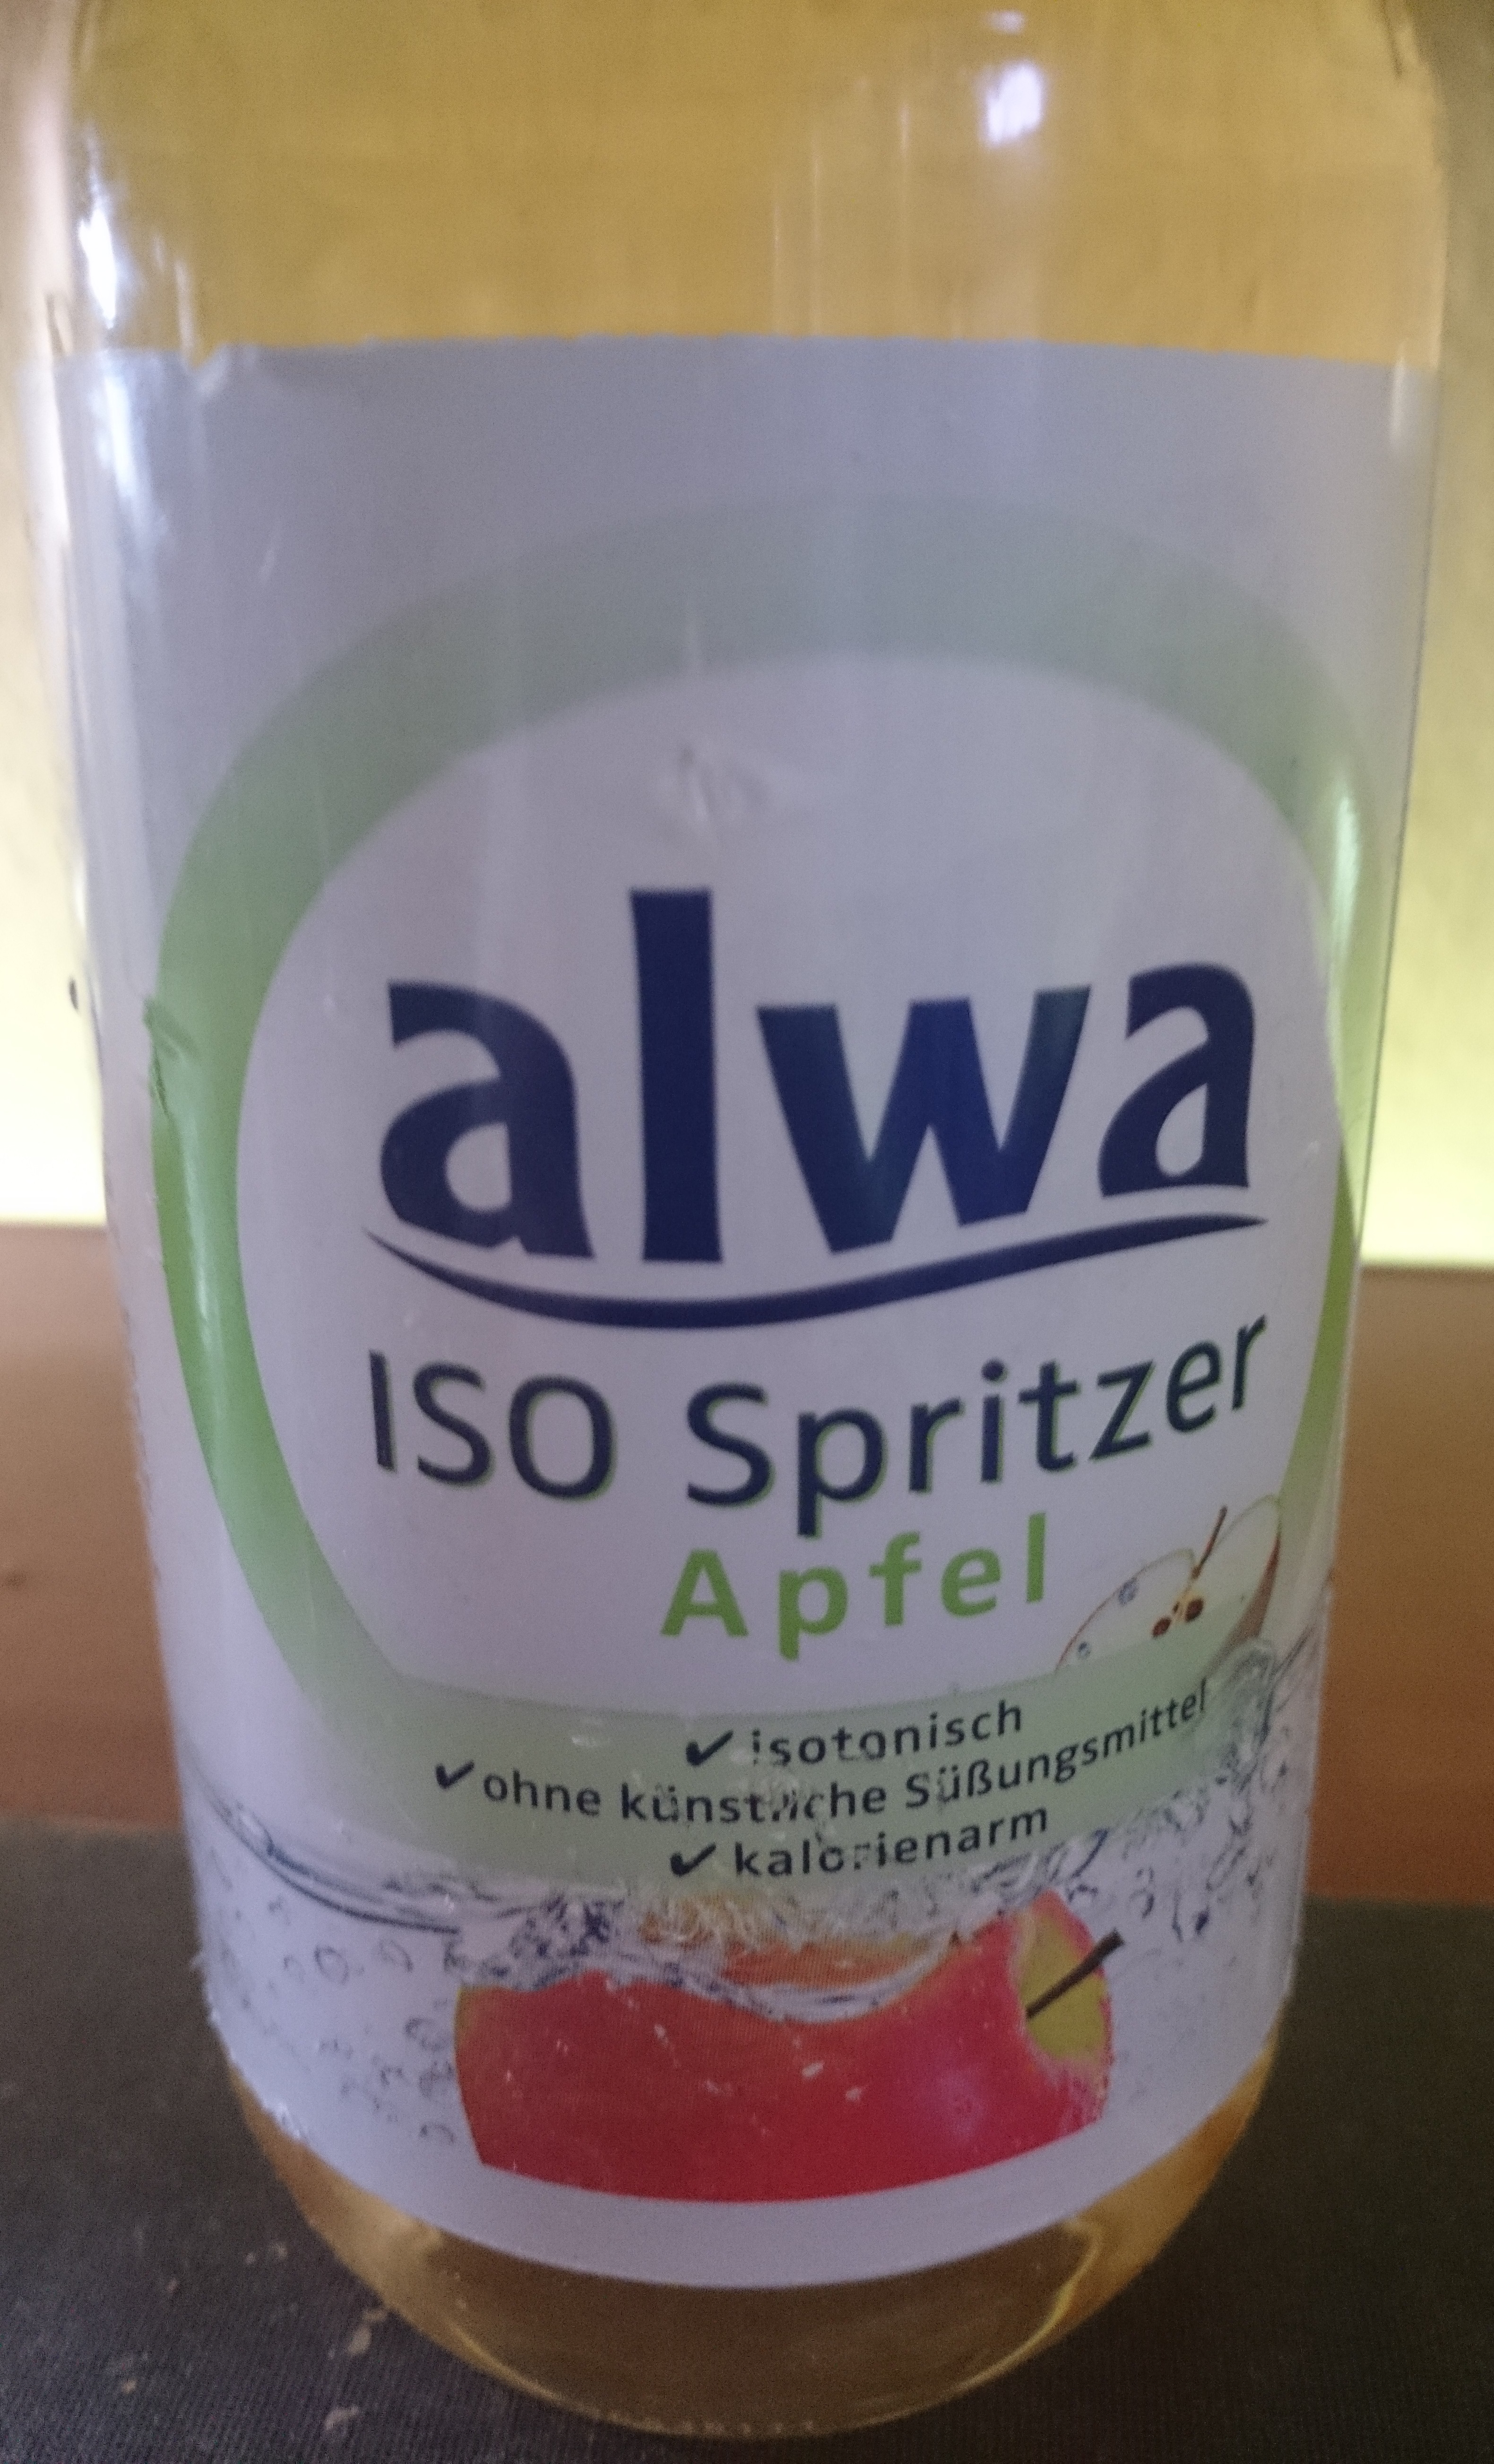 alwa-iso-spritzer-apfel-etikett